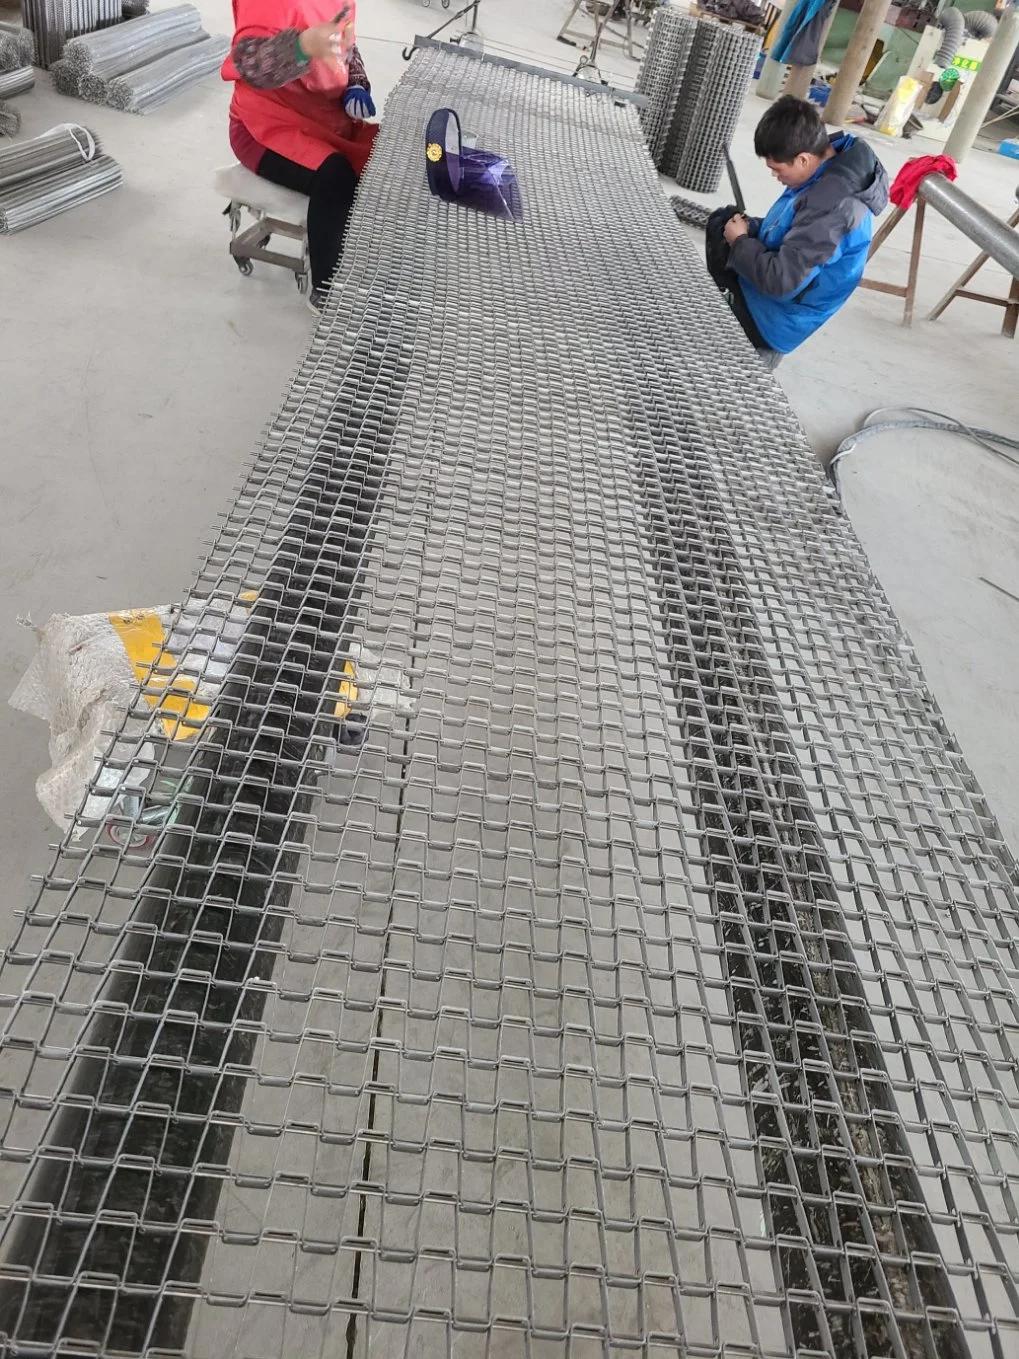 Chain Conveyor Belt Stainless Steel Wire Mesh Conveyor Belt